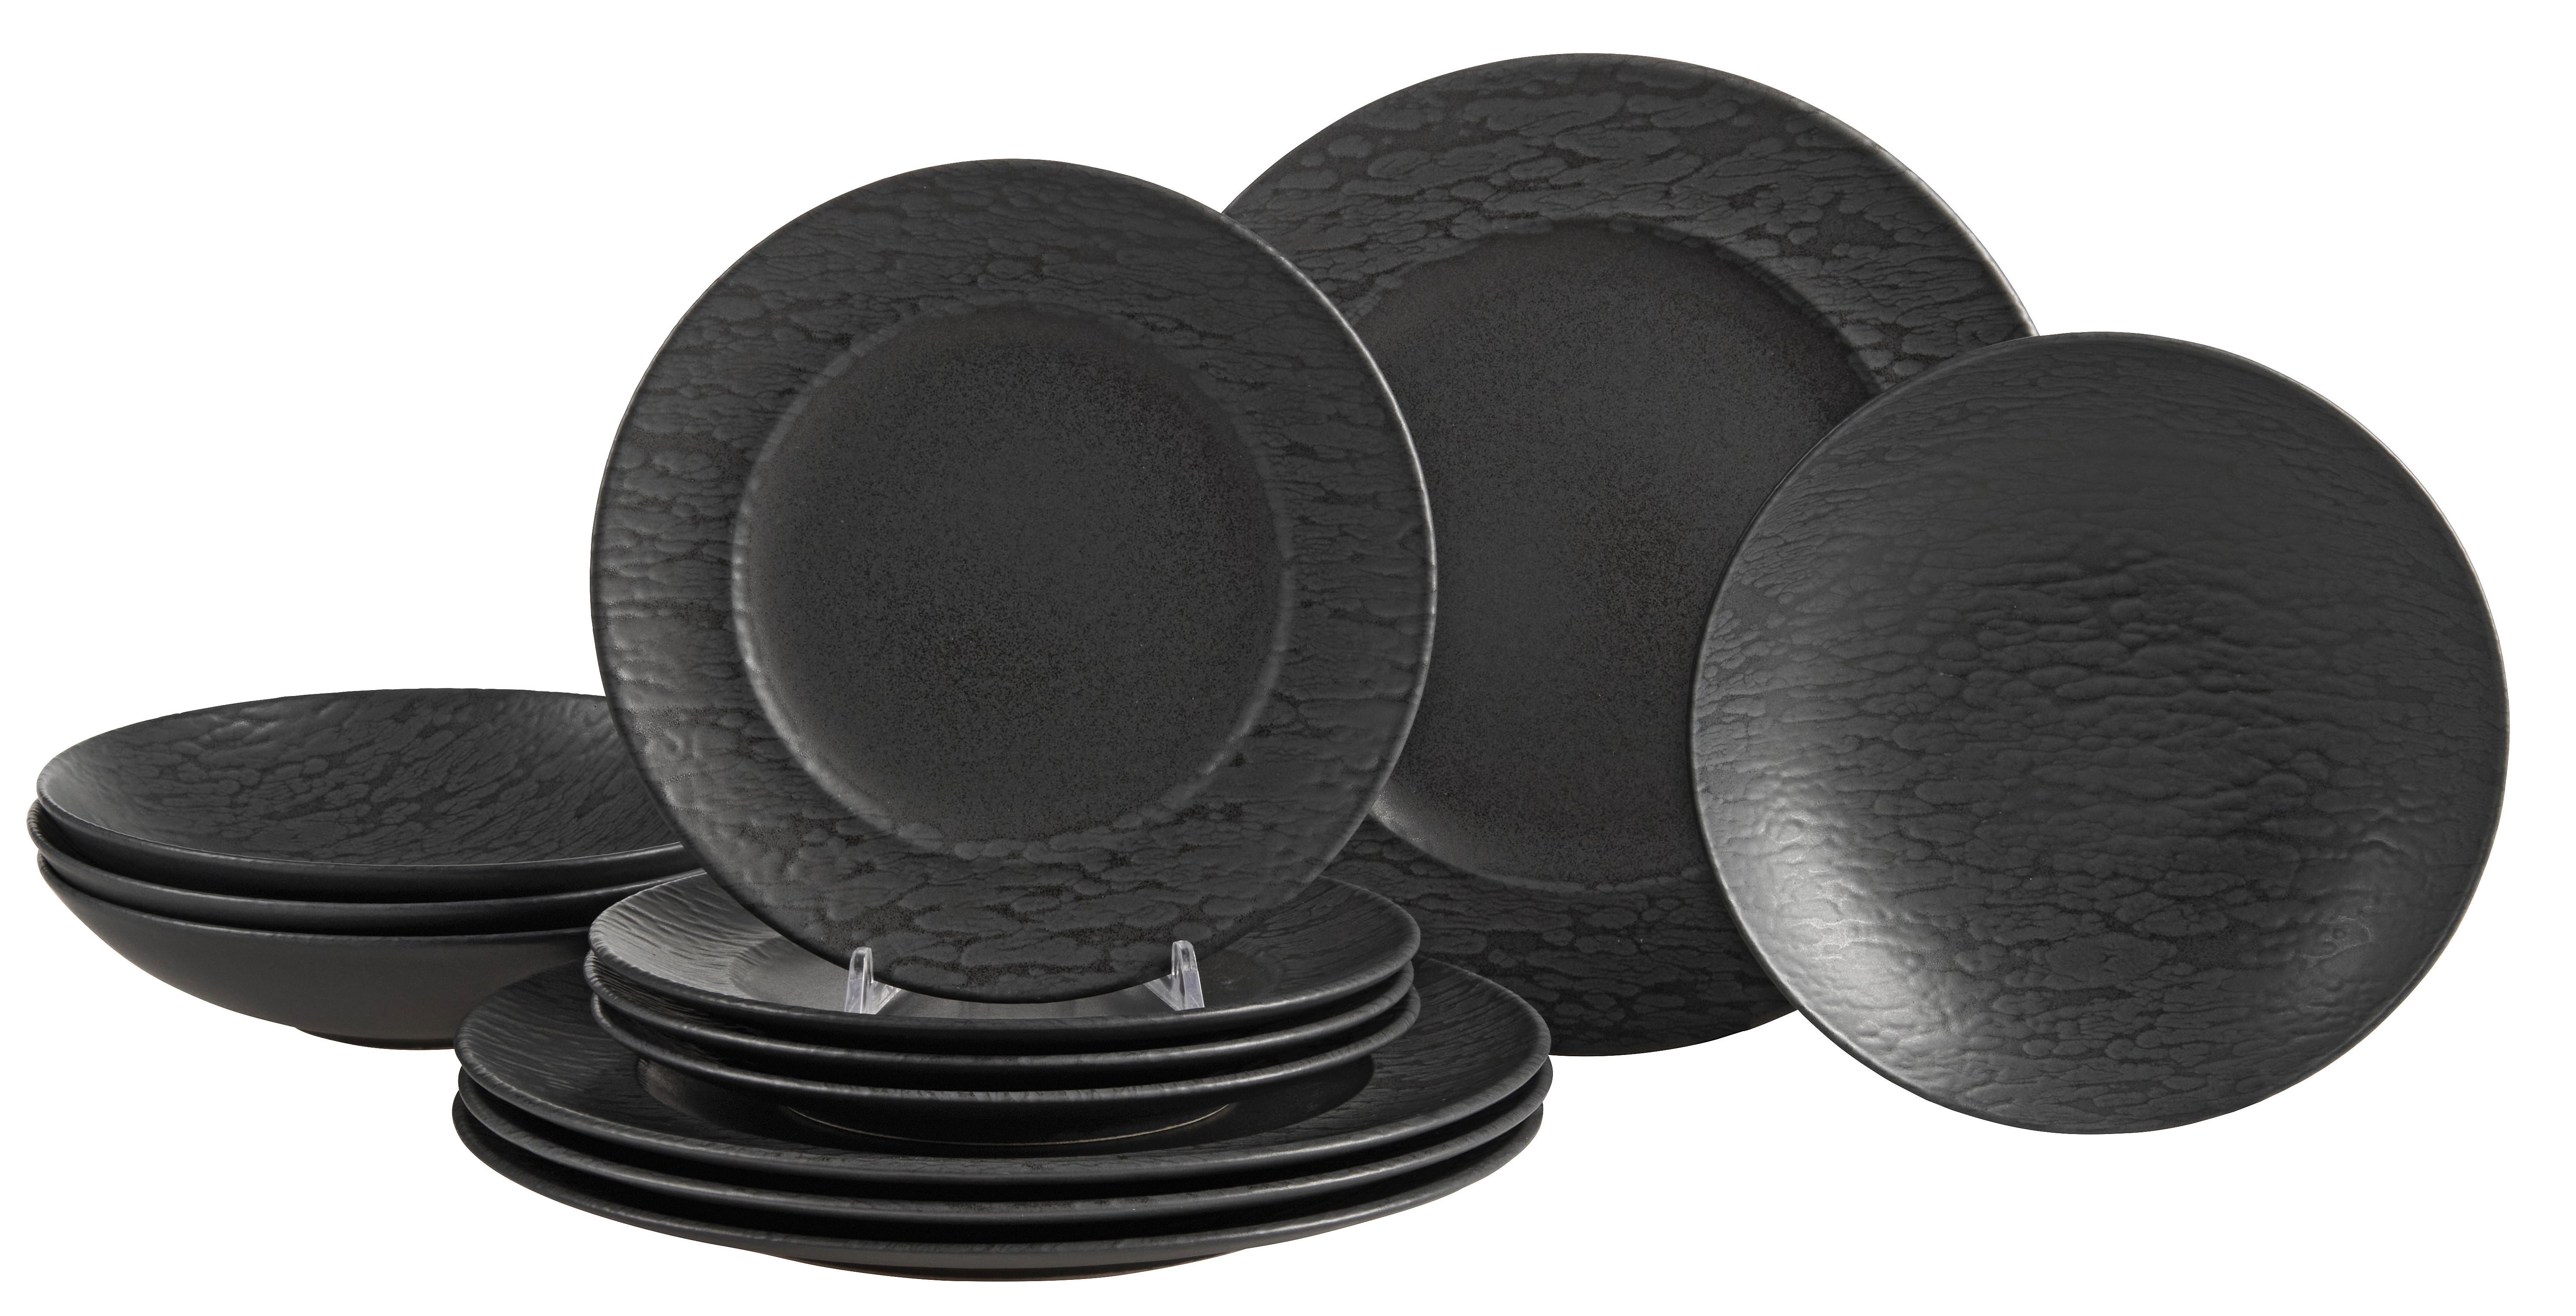 Zastawa stołowa BLACK VINTAGE czarna - czarny, Modern, ceramika (1/1/1cm) - Premium Living